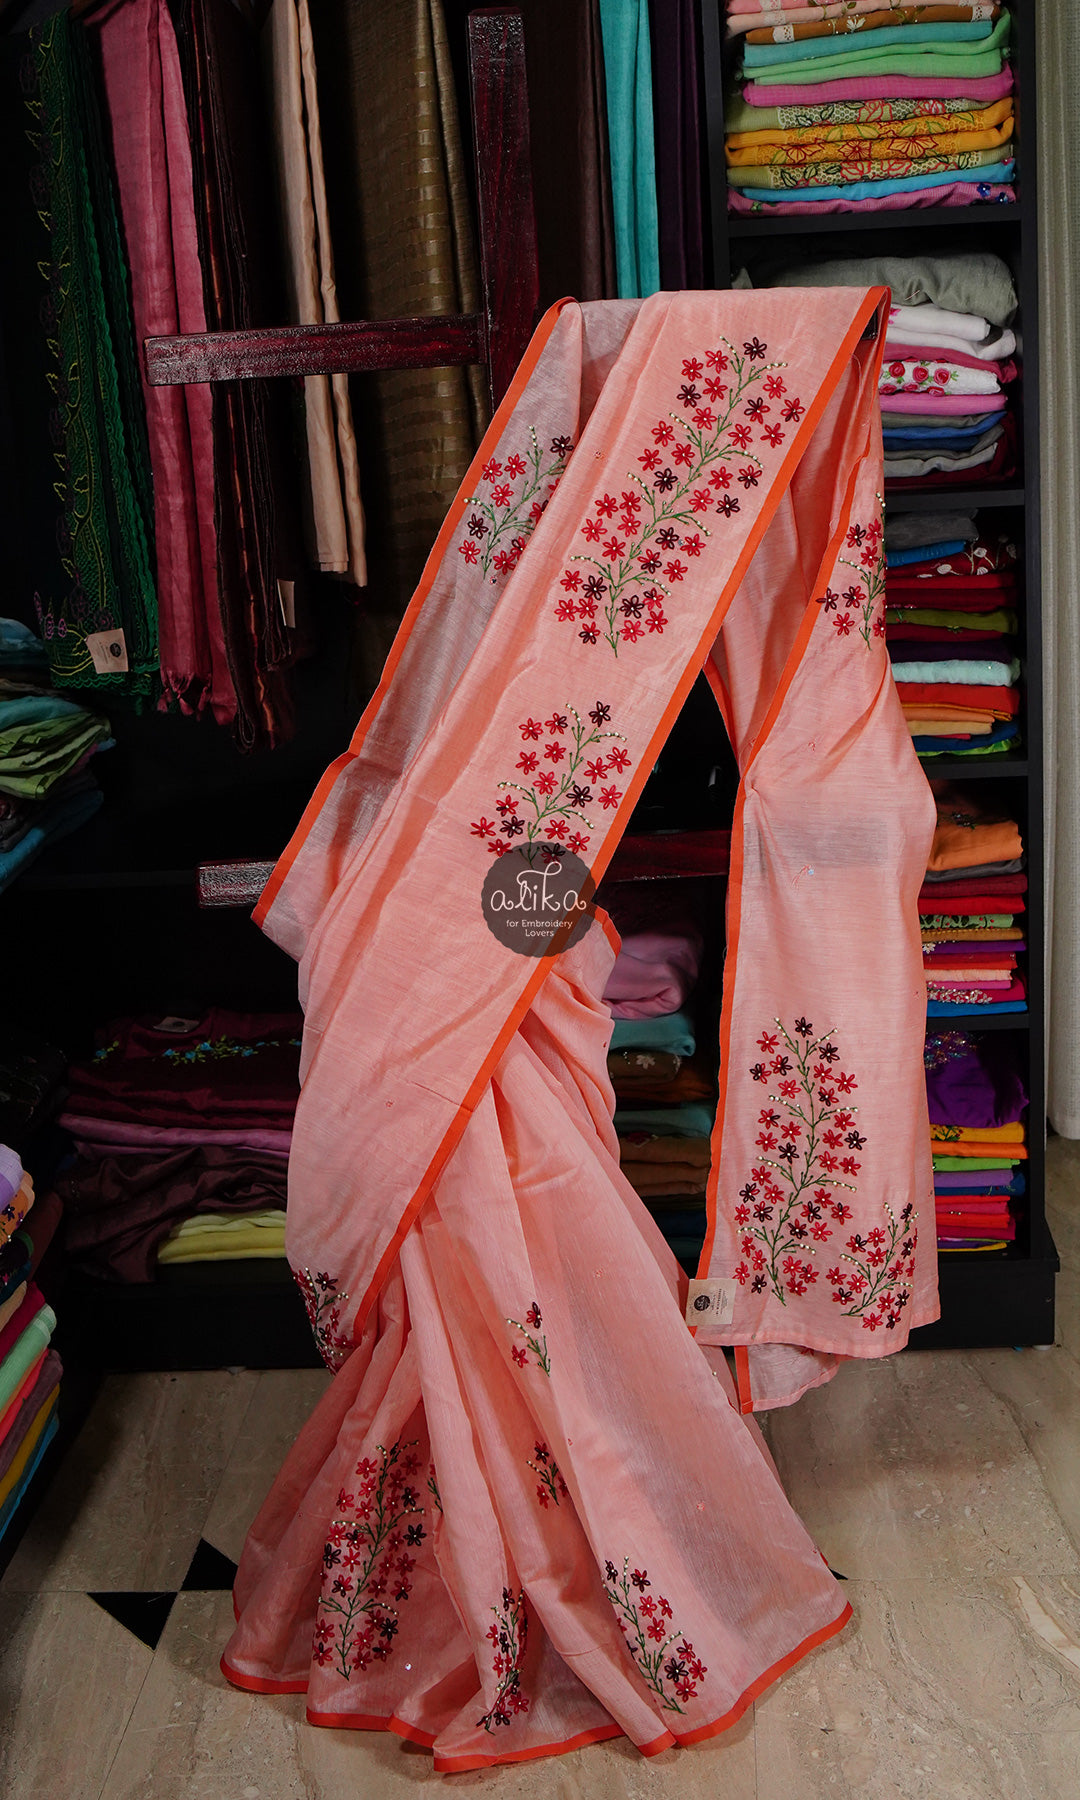 🍑✨ Peachy Elegance: Chanderi Silk Mirror Work Saree with Lazy Daisy Floral Embroidery ✨🌸